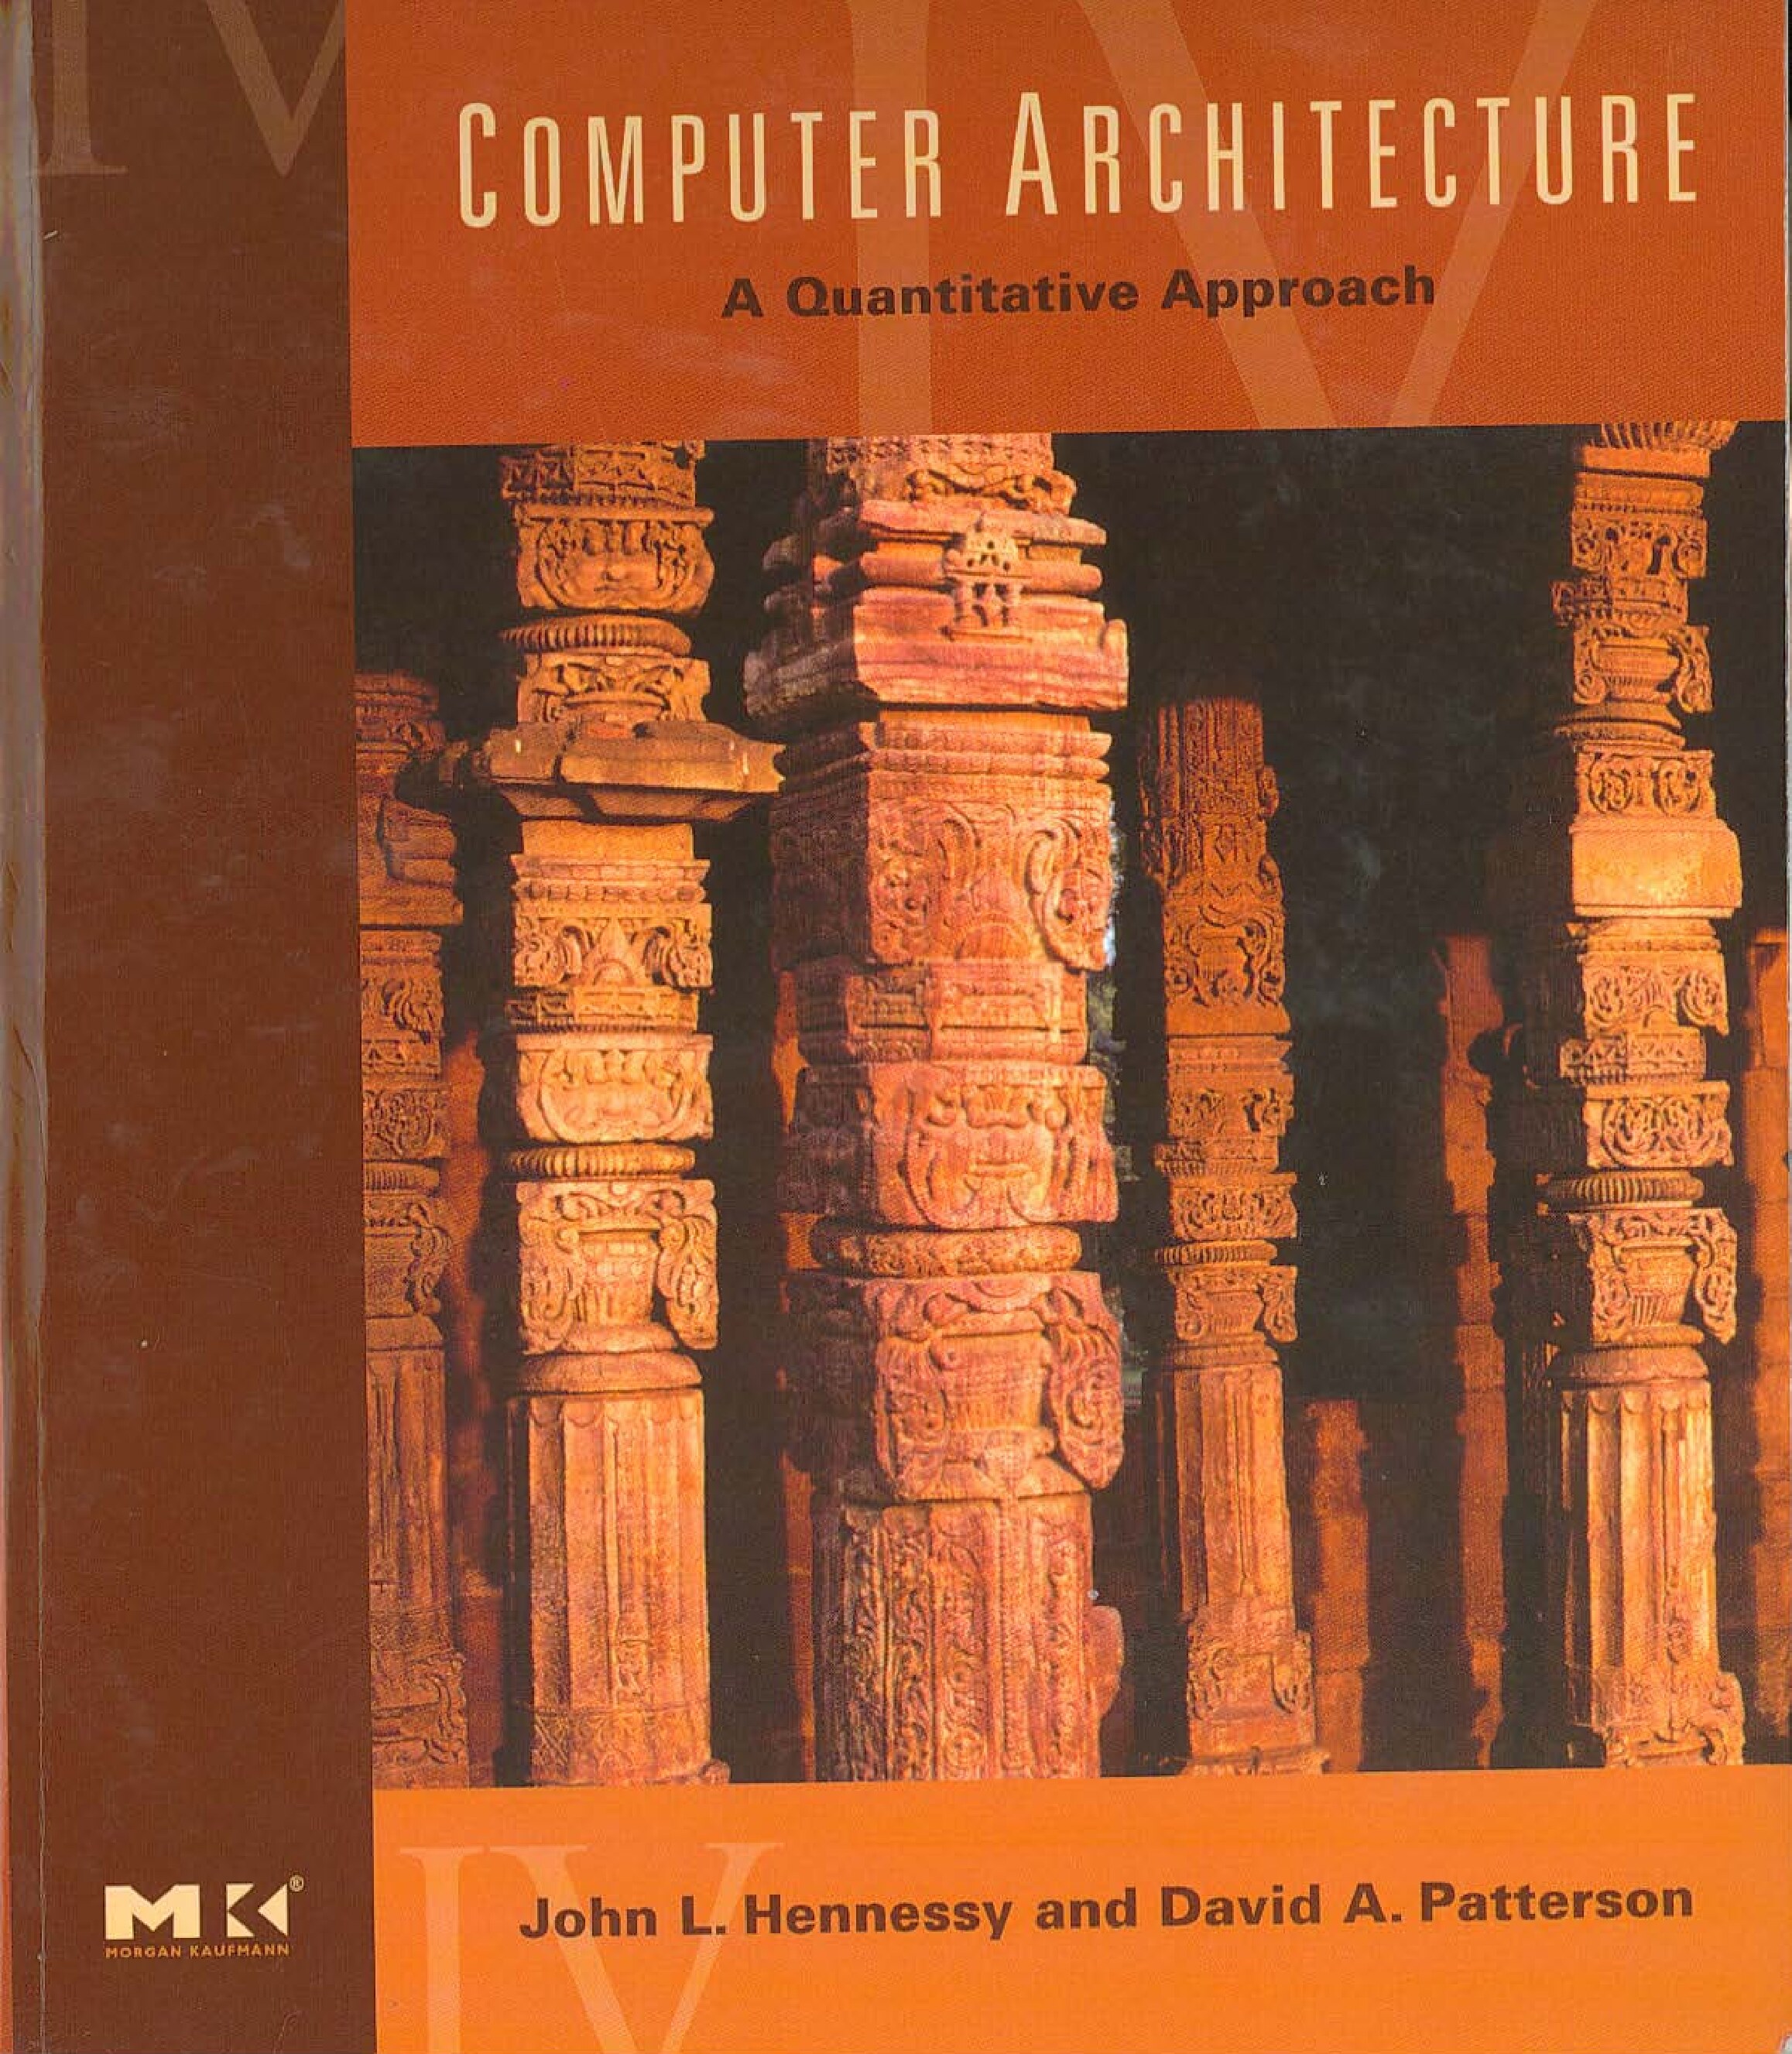 John L. Hennessy, David A. Patterson - Computer Architecture_ A Quantitative Approach, 4th Edition-Morgan Kaufmann (2006)